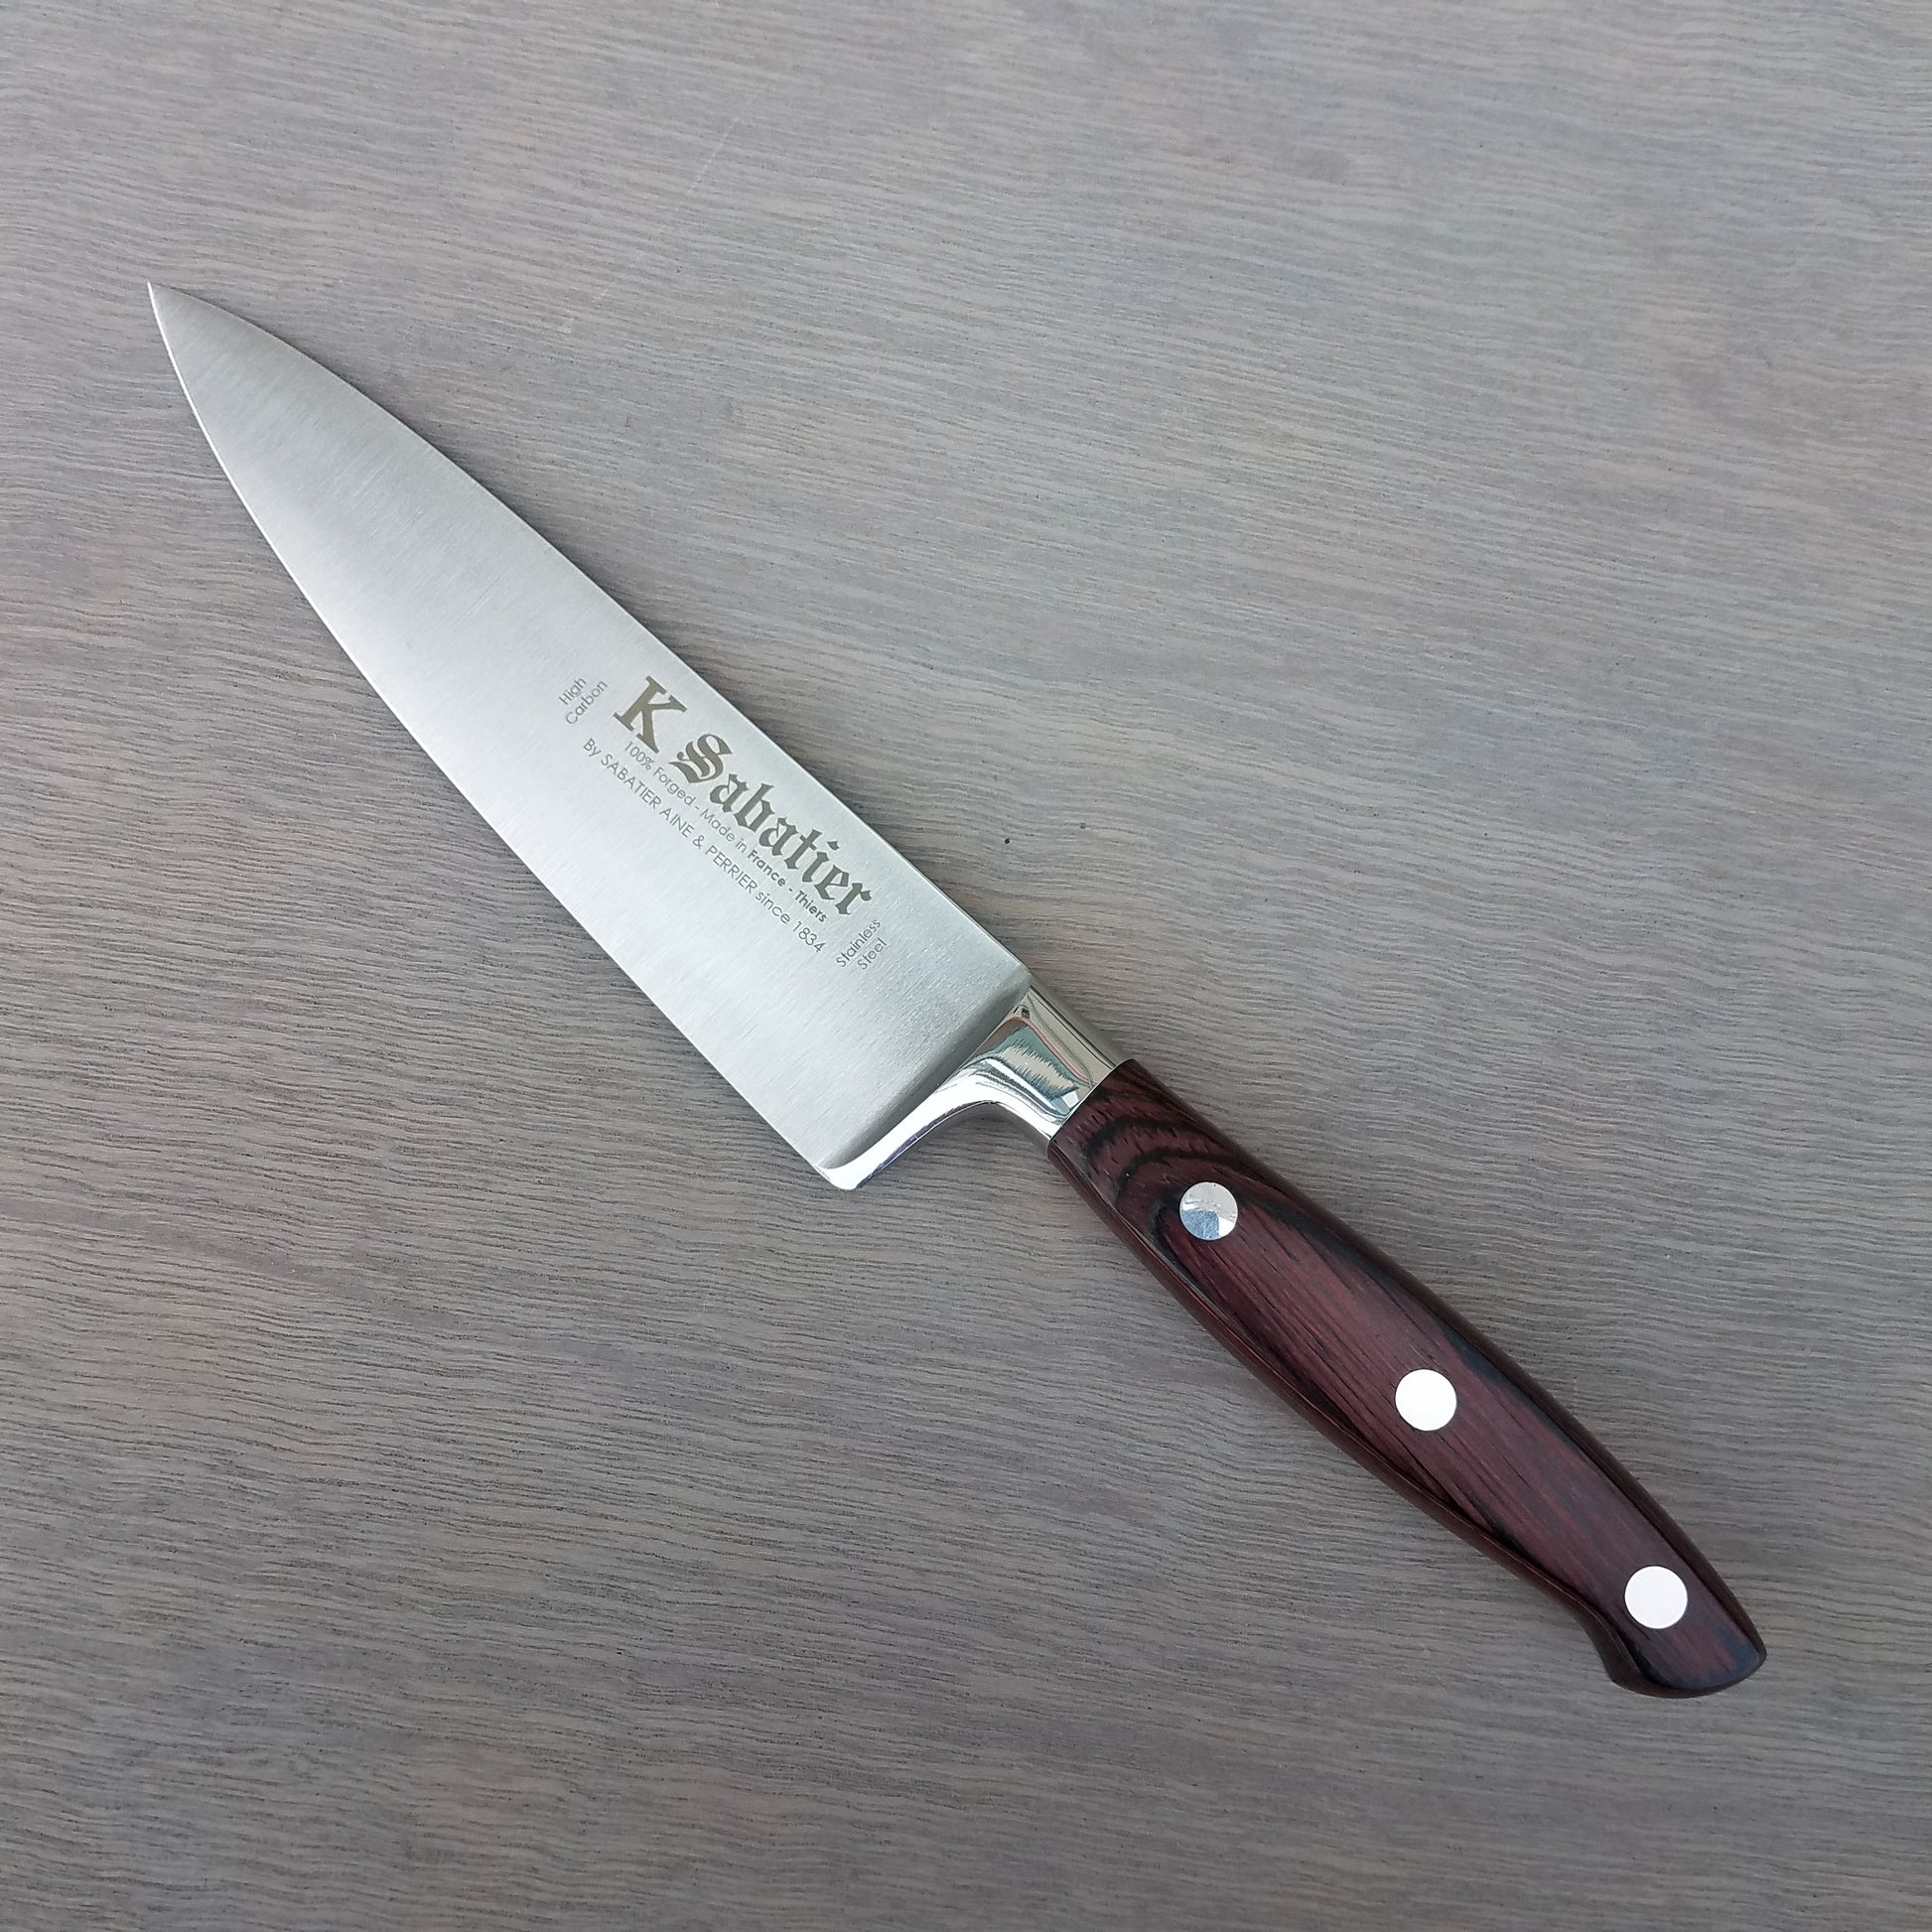 Bernal Cutlery - Review K Sabatier 10 carbon steel chef knives